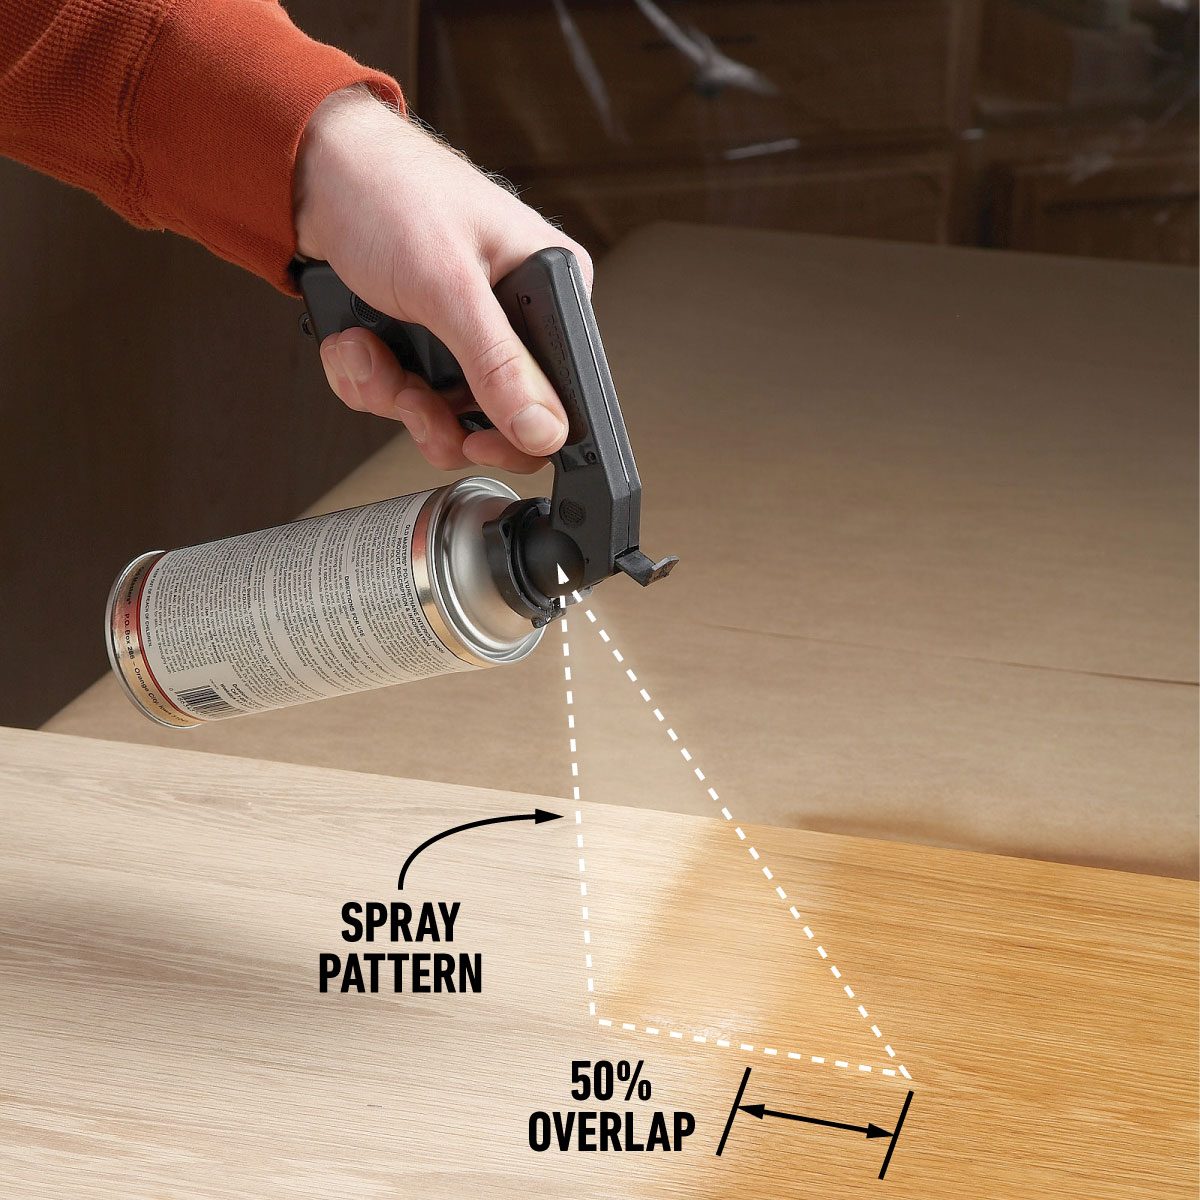 9 Tips For Spraying Varnish On Wood Overlap The Polyurethane Spray Swipes